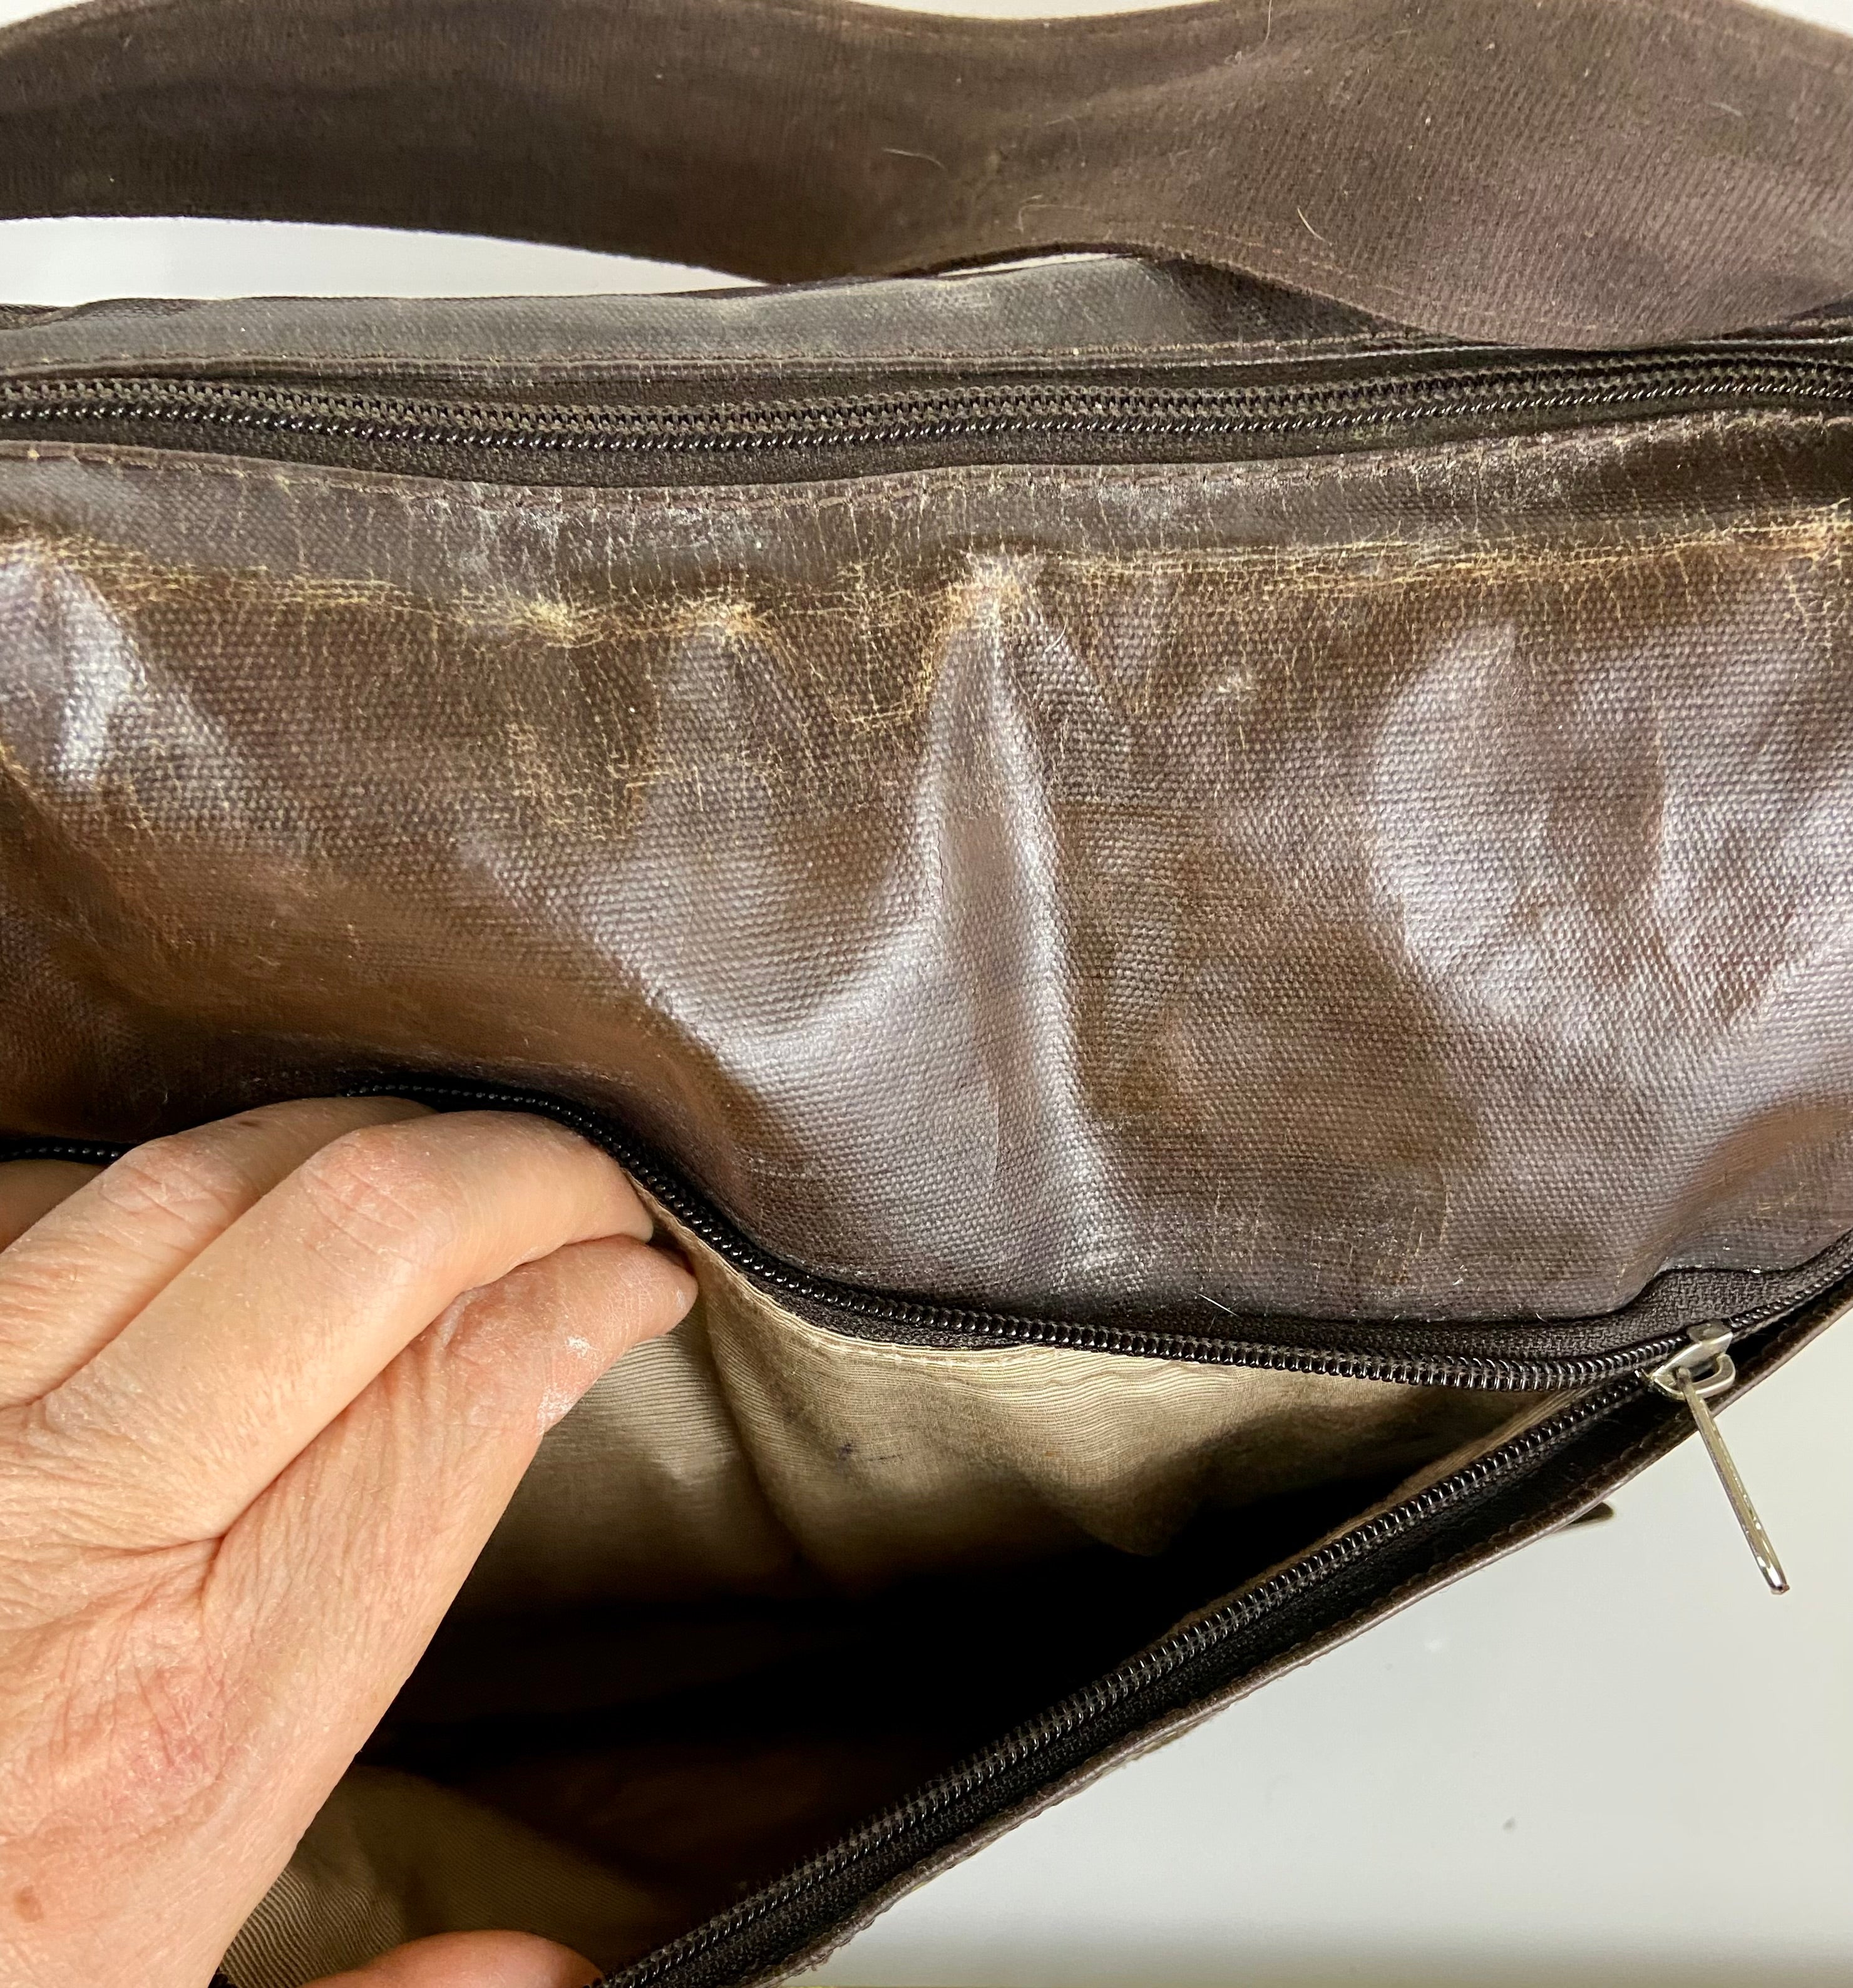 Vintage puma🐆 brown leather bag